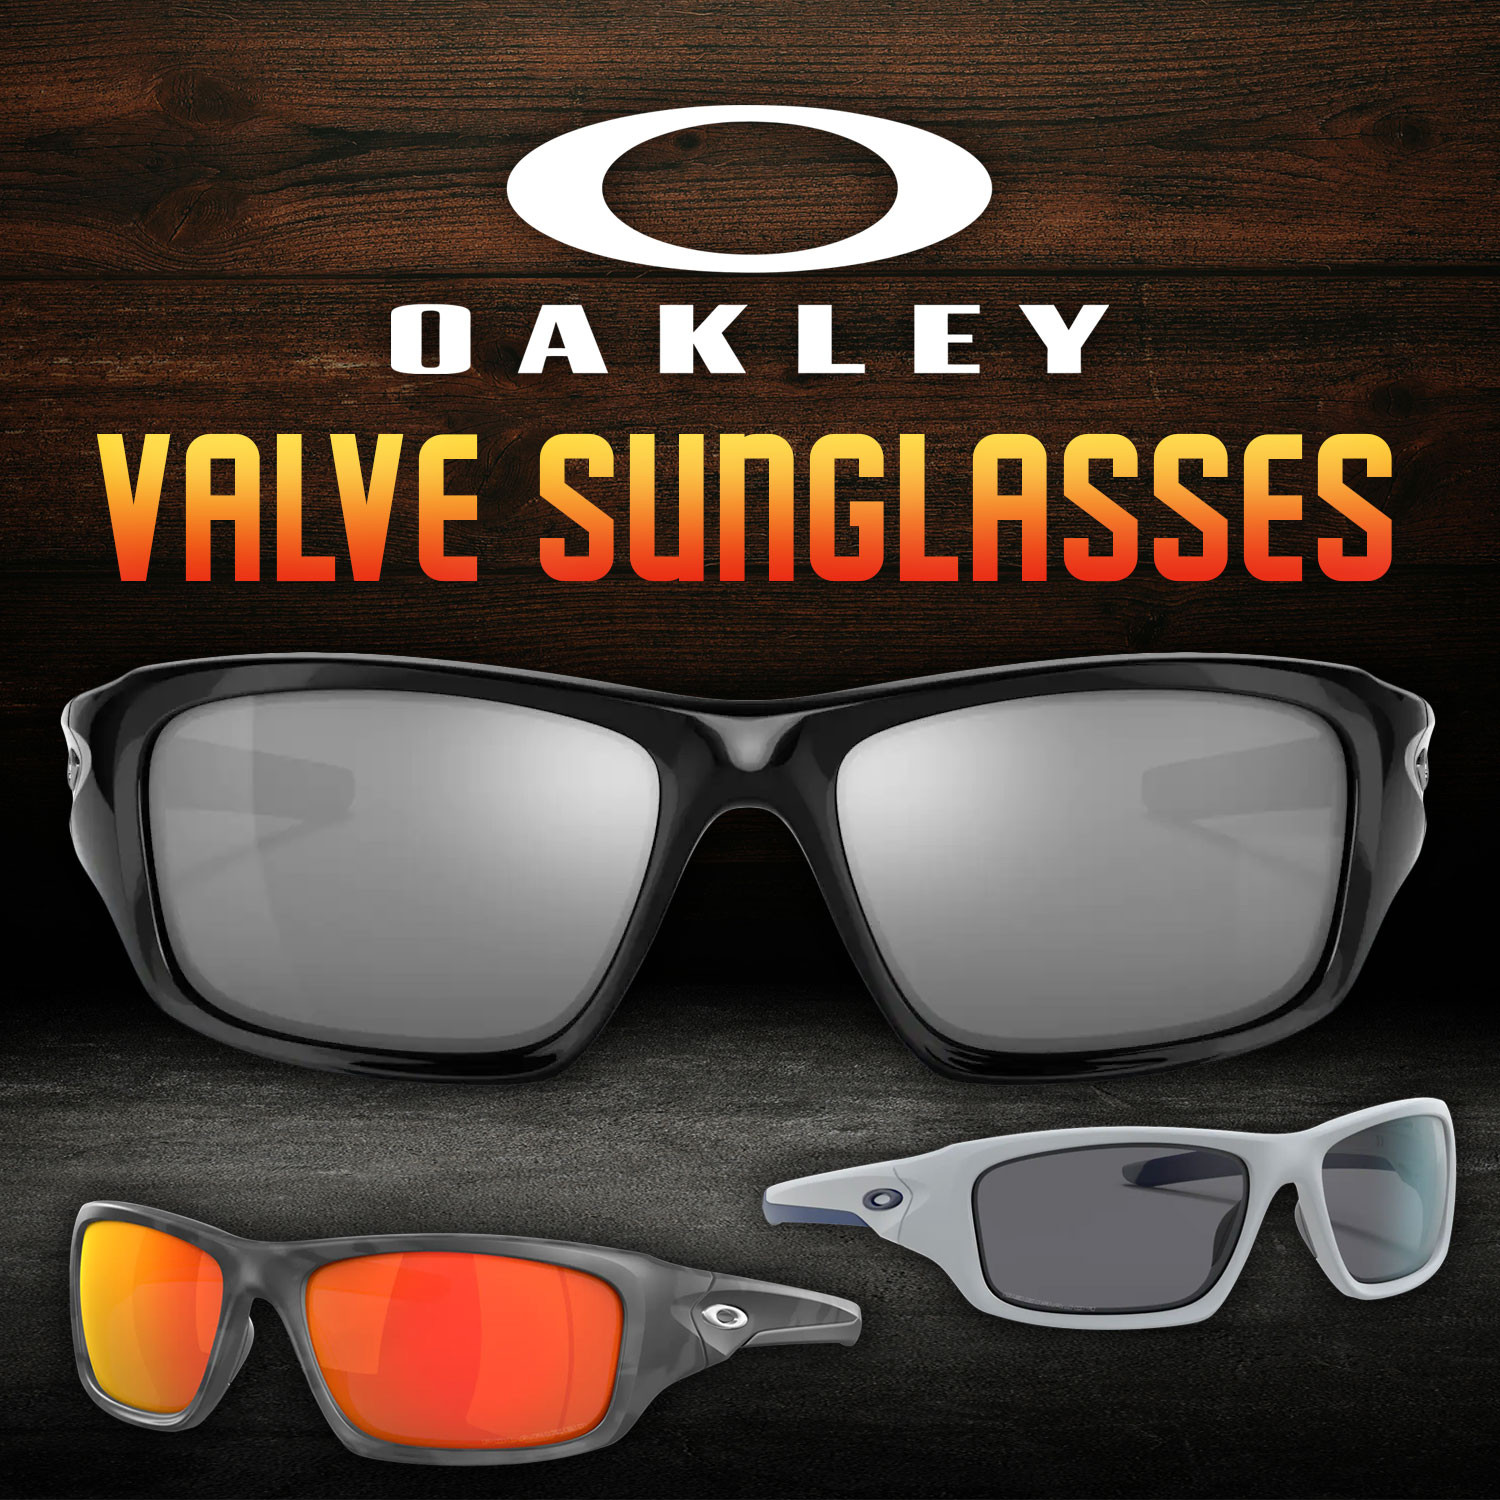 Oakley Valve Sunglasses | Field Supply